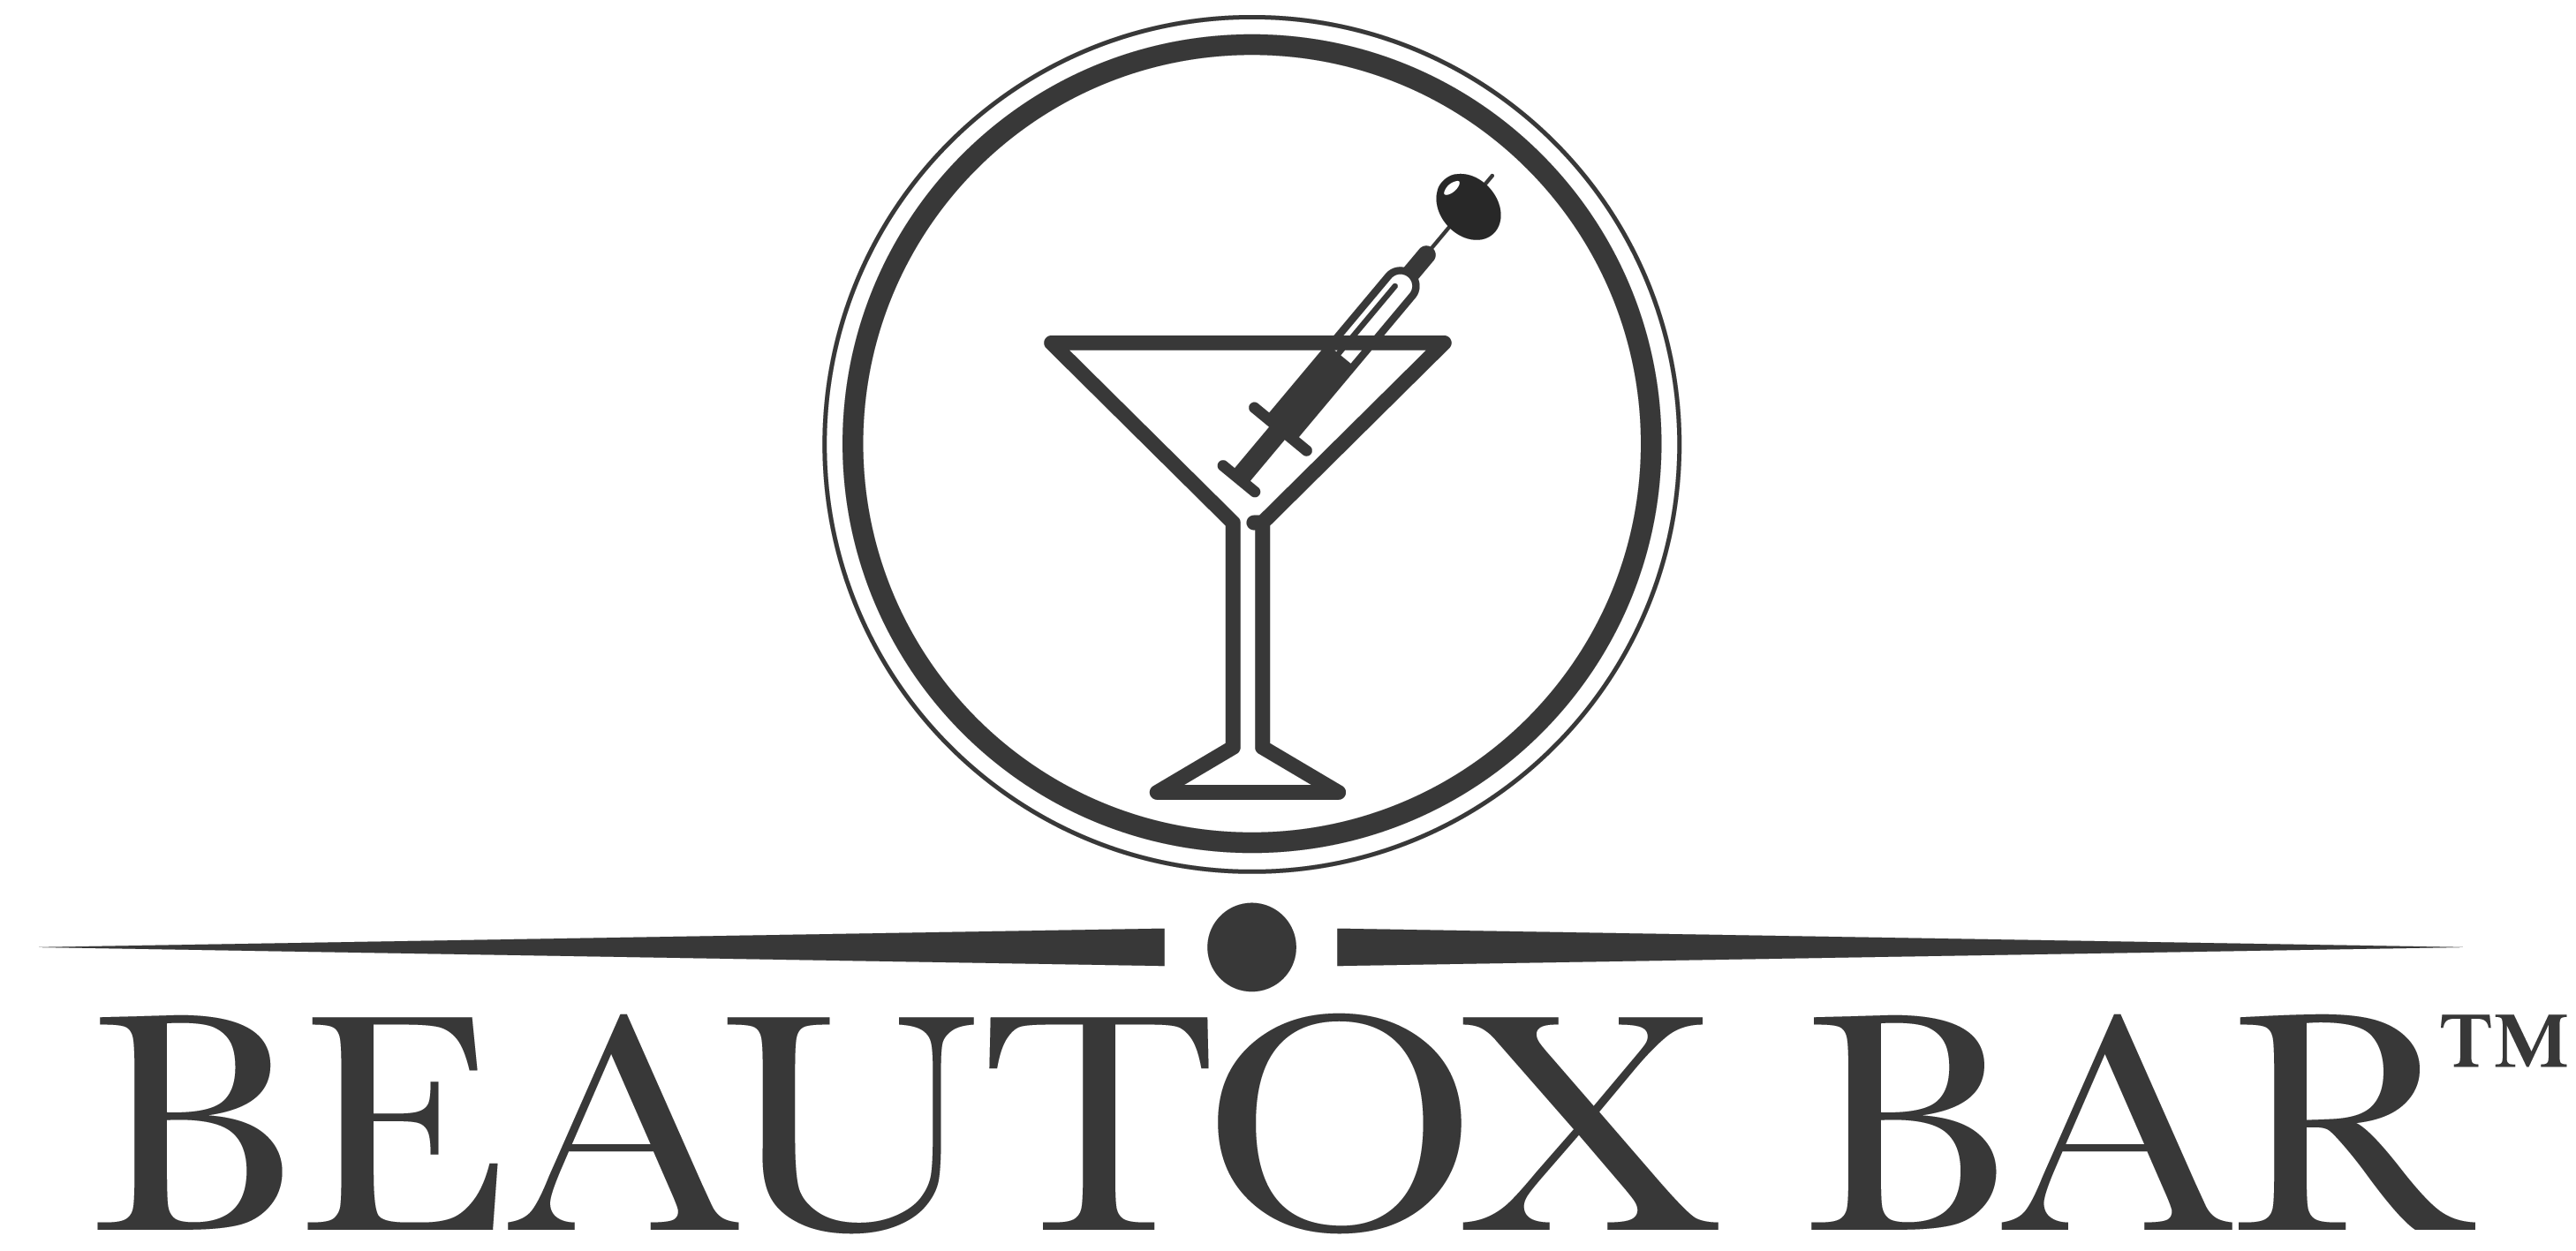 Beautox Bar logo in black